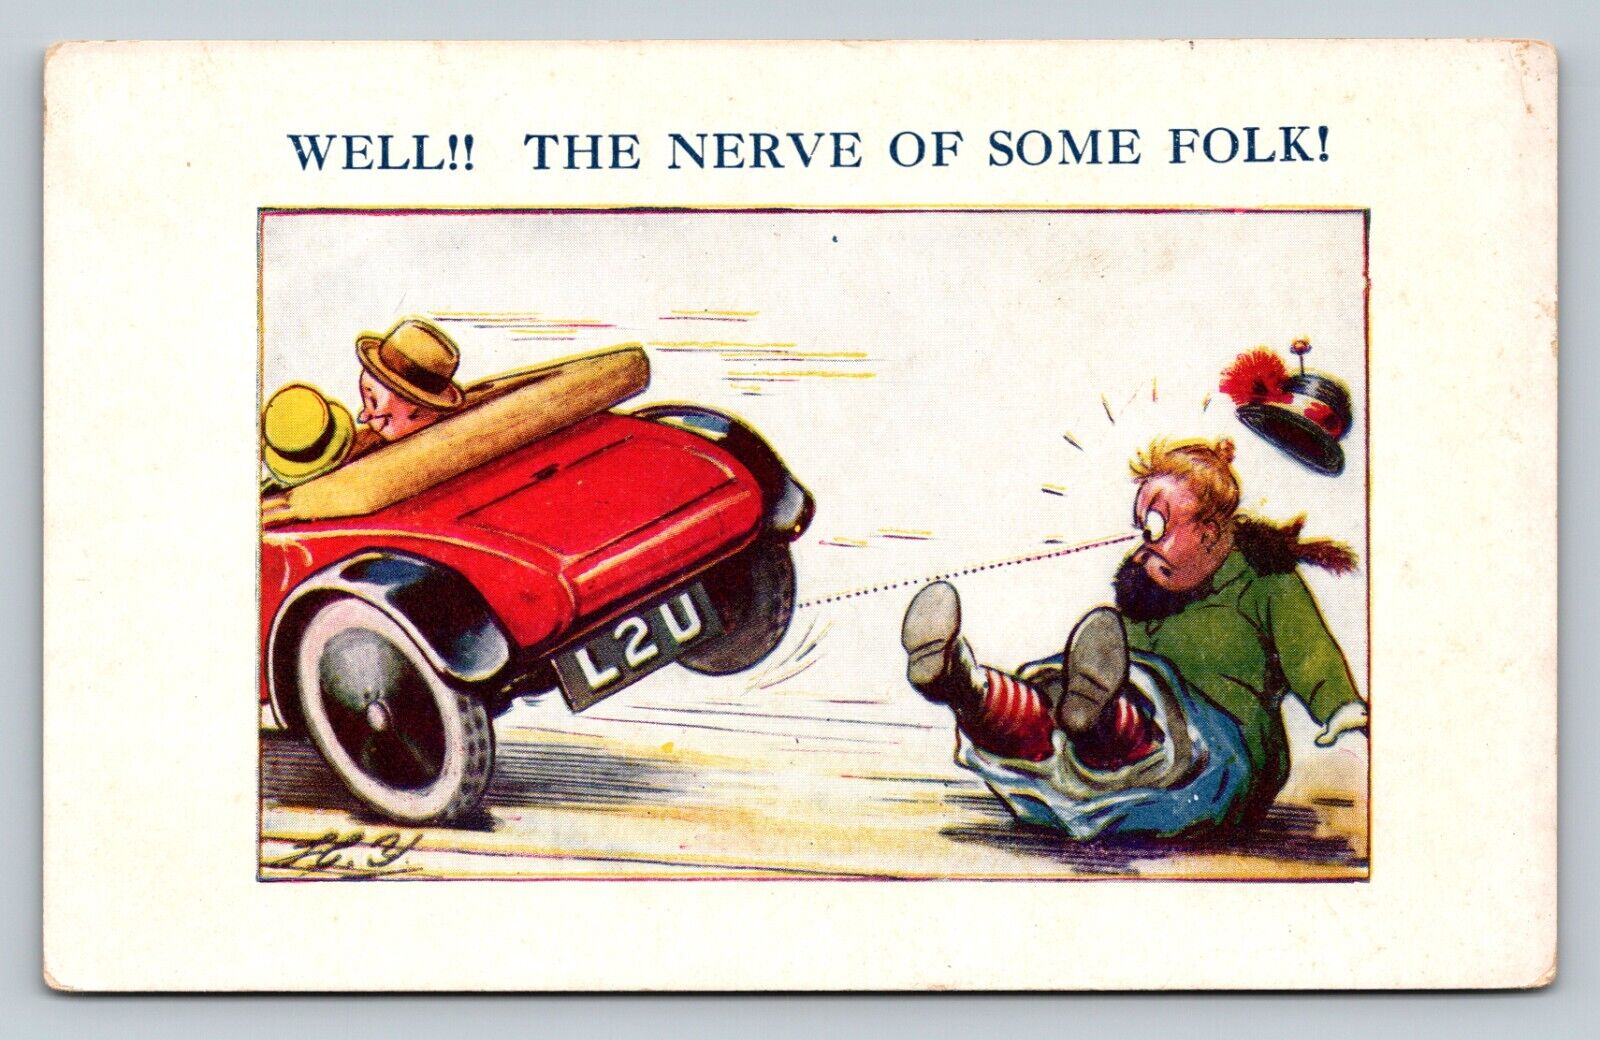 The Nerve of Some Folk Person Falls Over Speeding Car L2U VINTAGE Comic Postcard